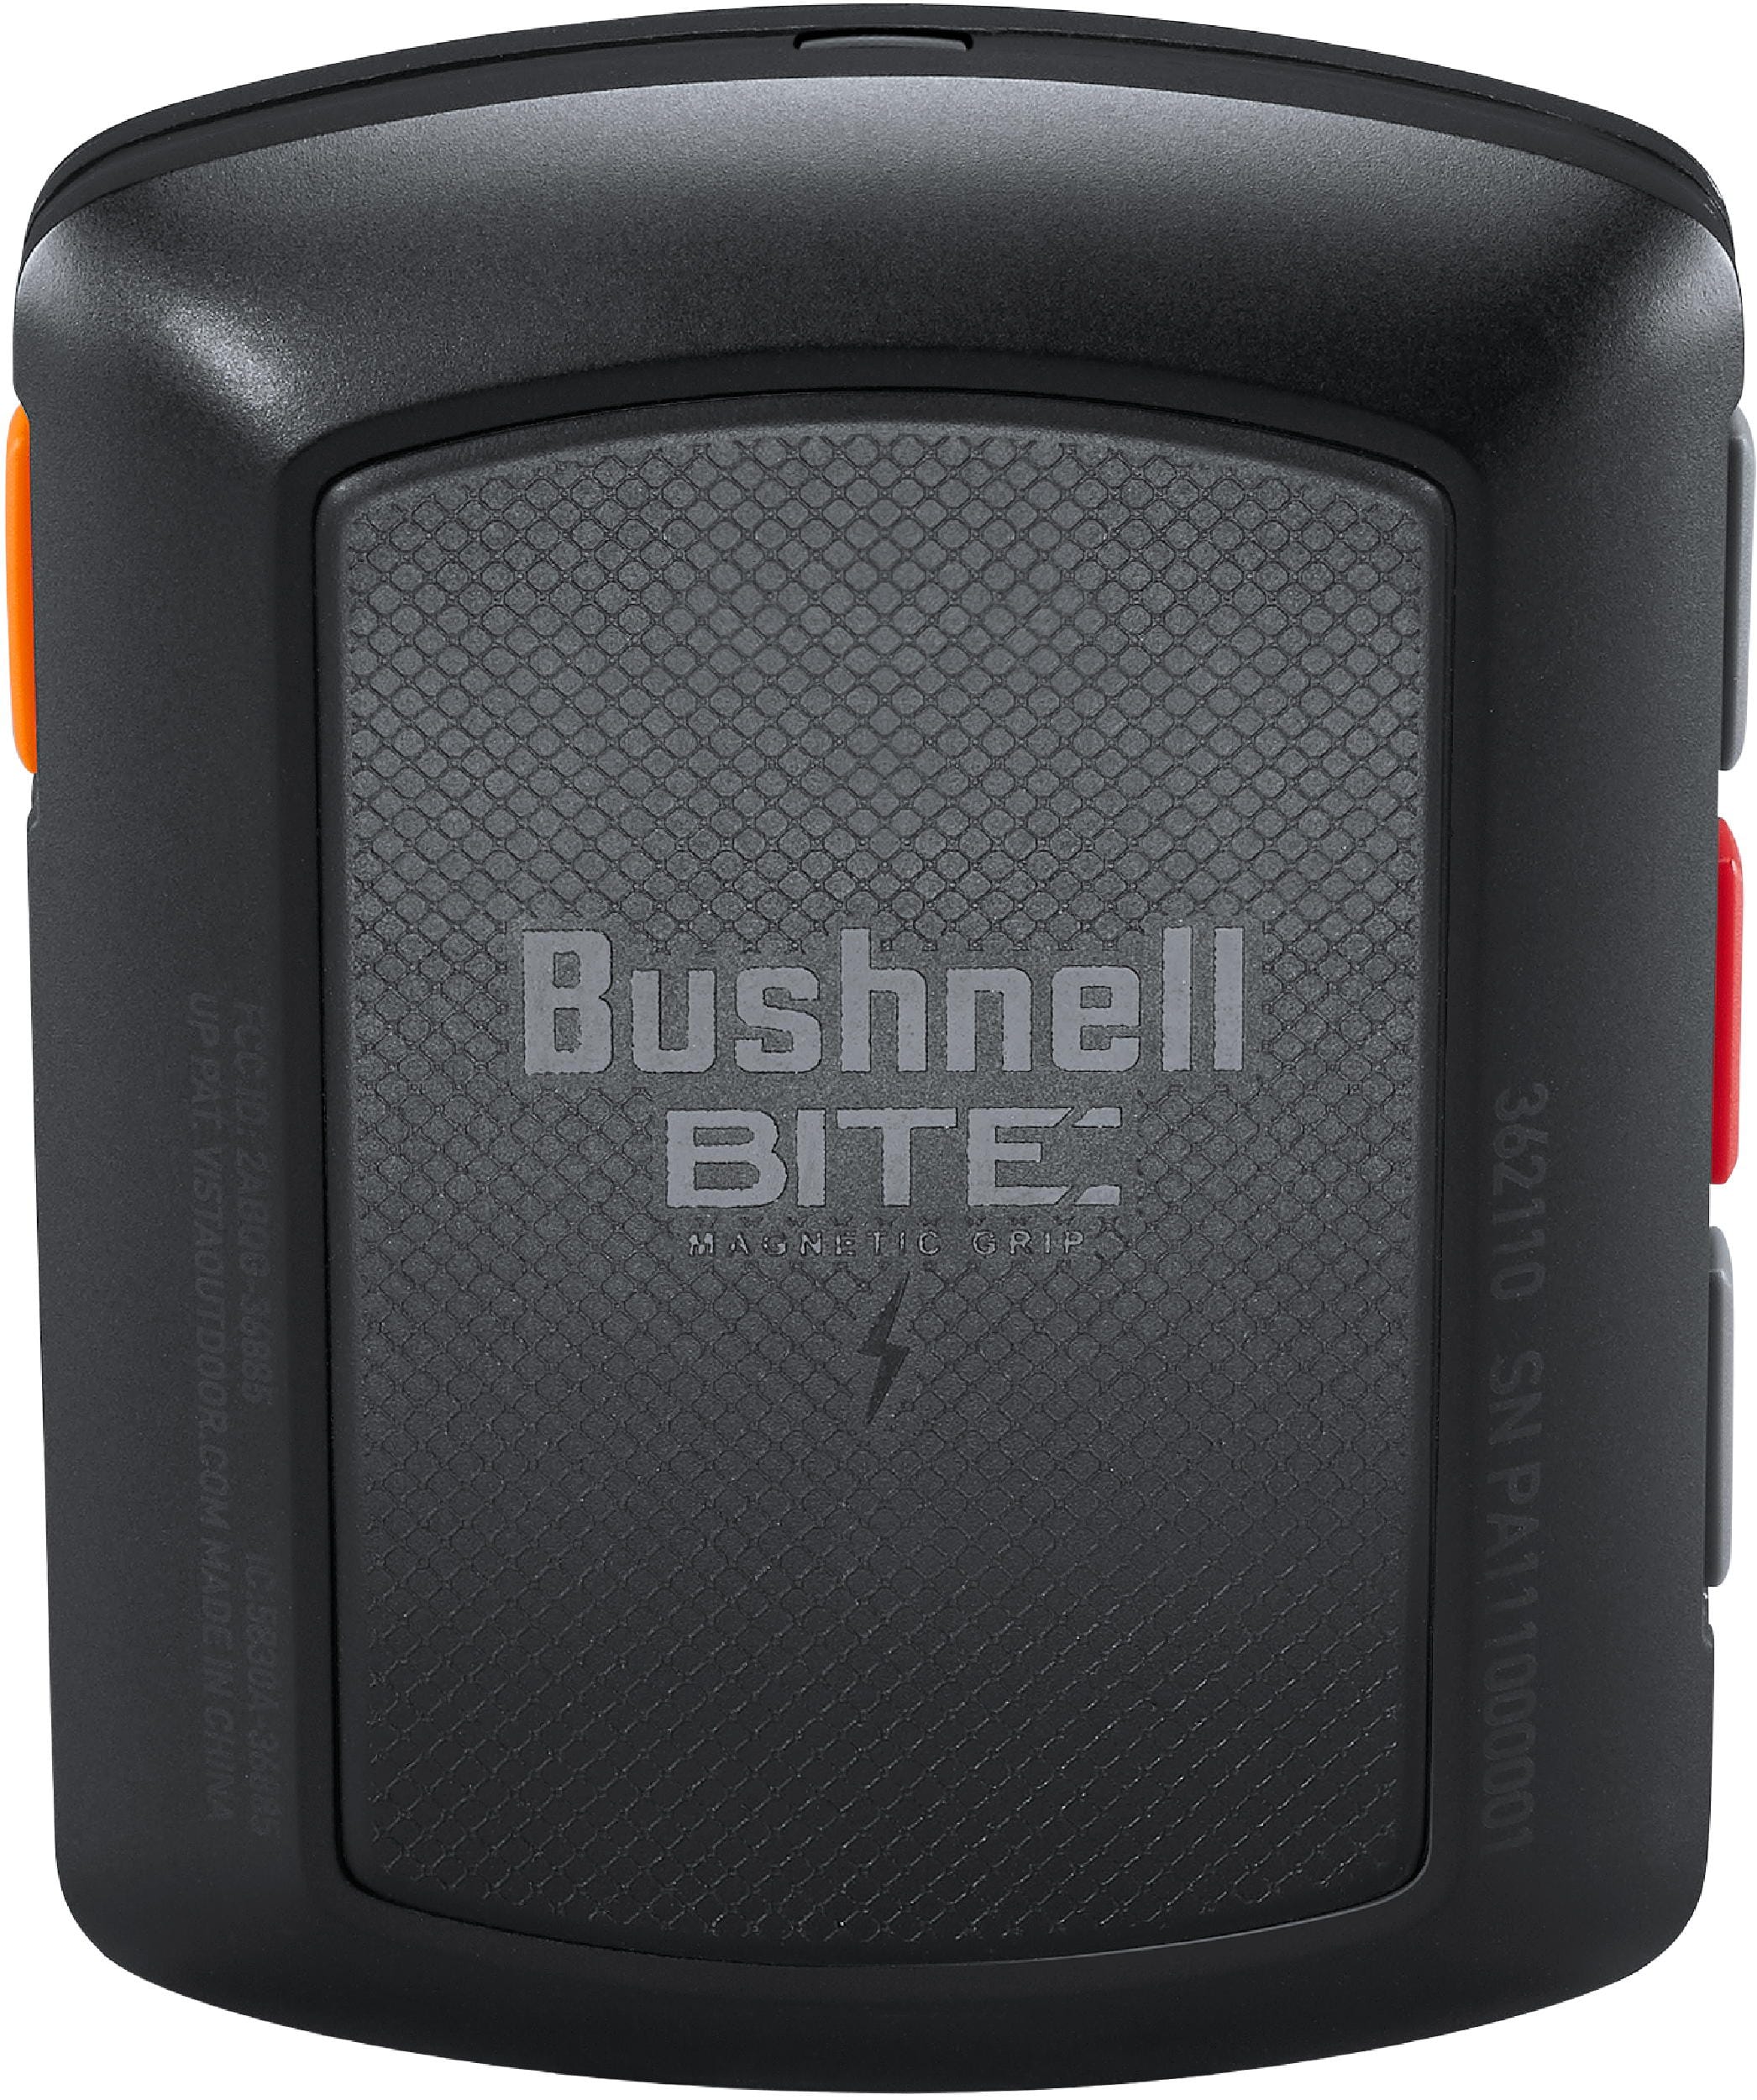 Bushnell Phantom 2 Golf GPS Handheld